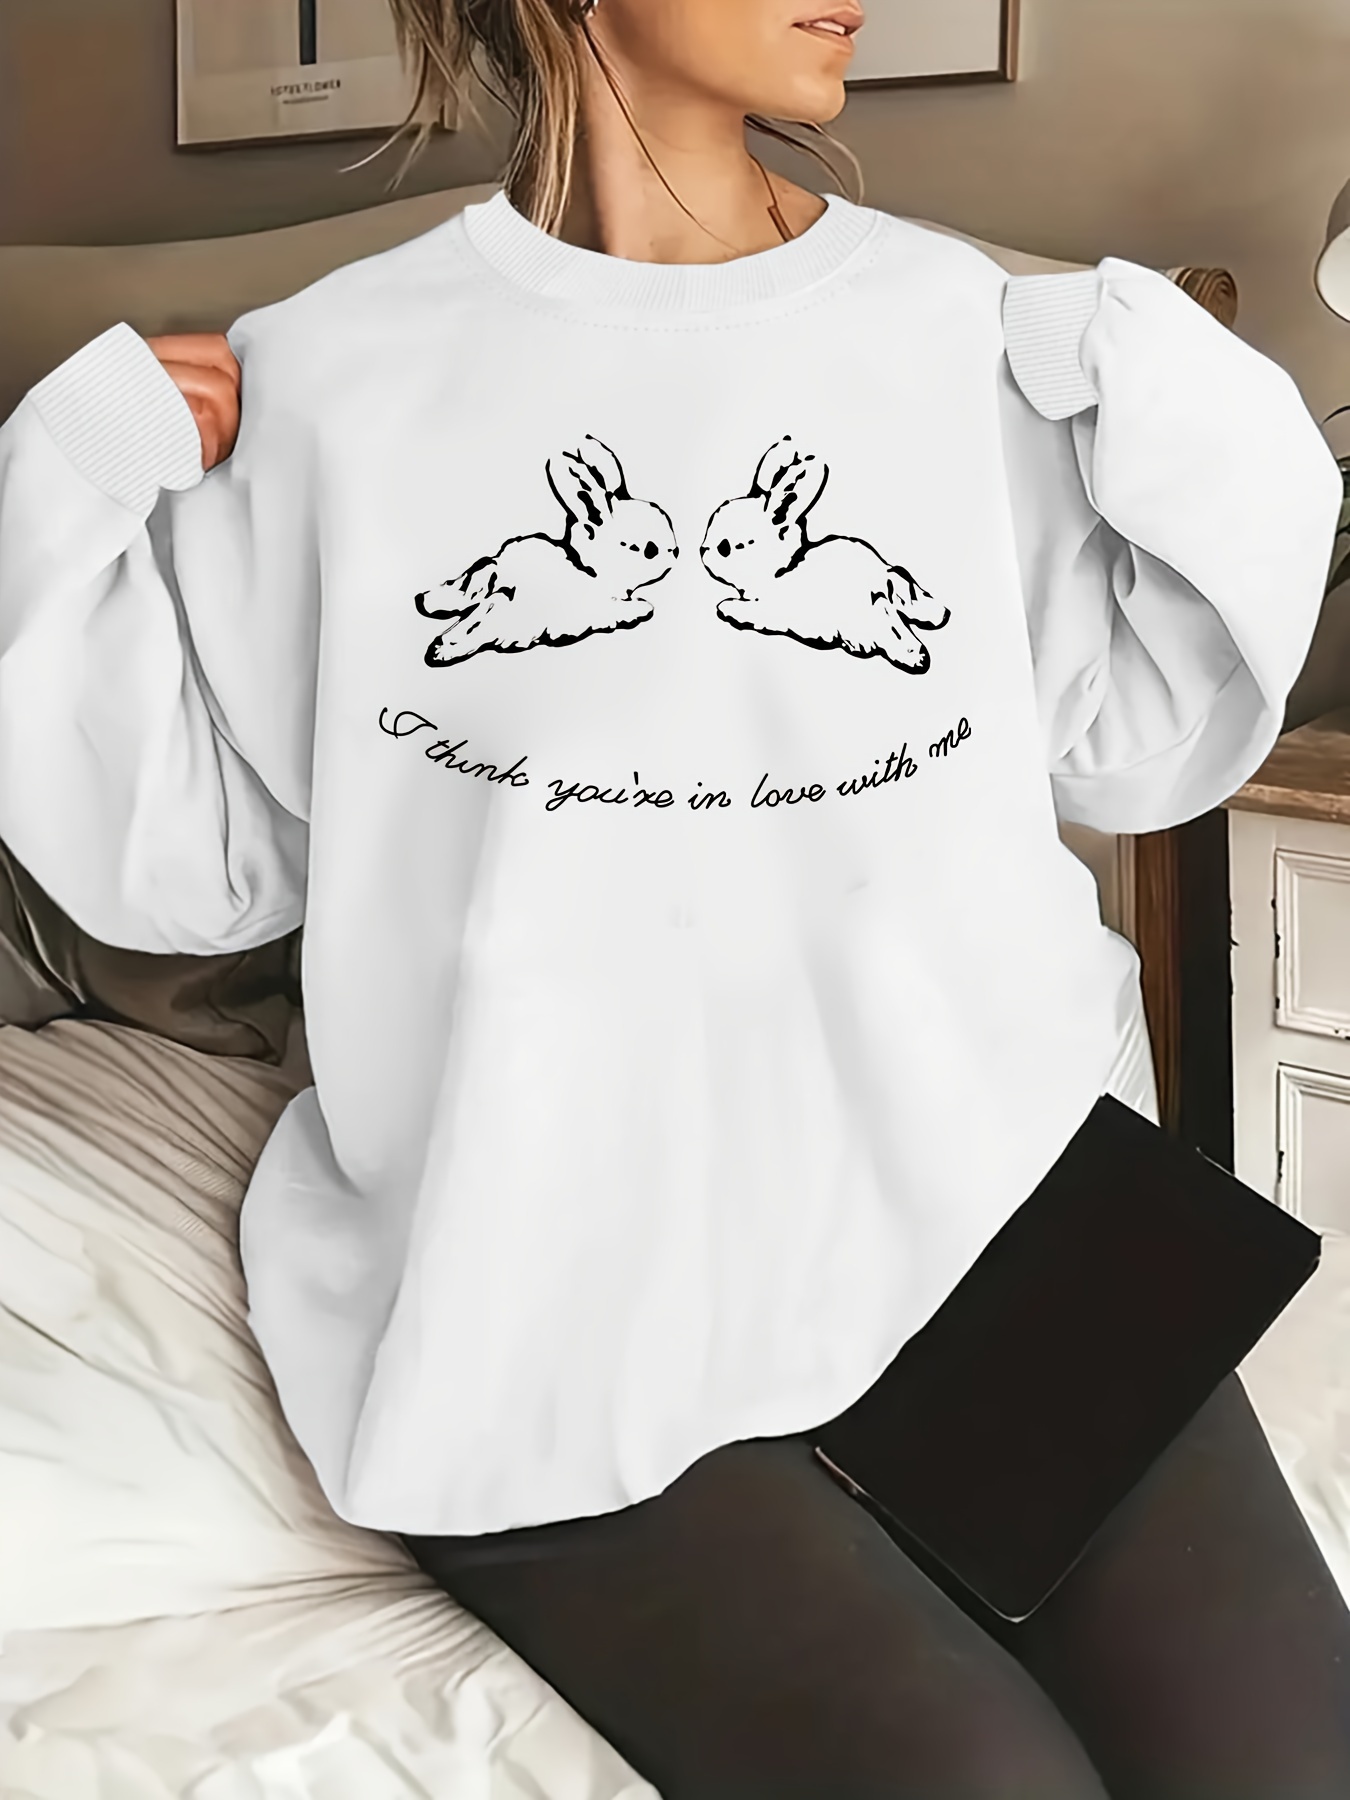 fartey Womens Oversized Sweatshirts Round Neck Mushroom Print Top Long  Sleeve Cute Shirt Loose Pullover Sweatshirt